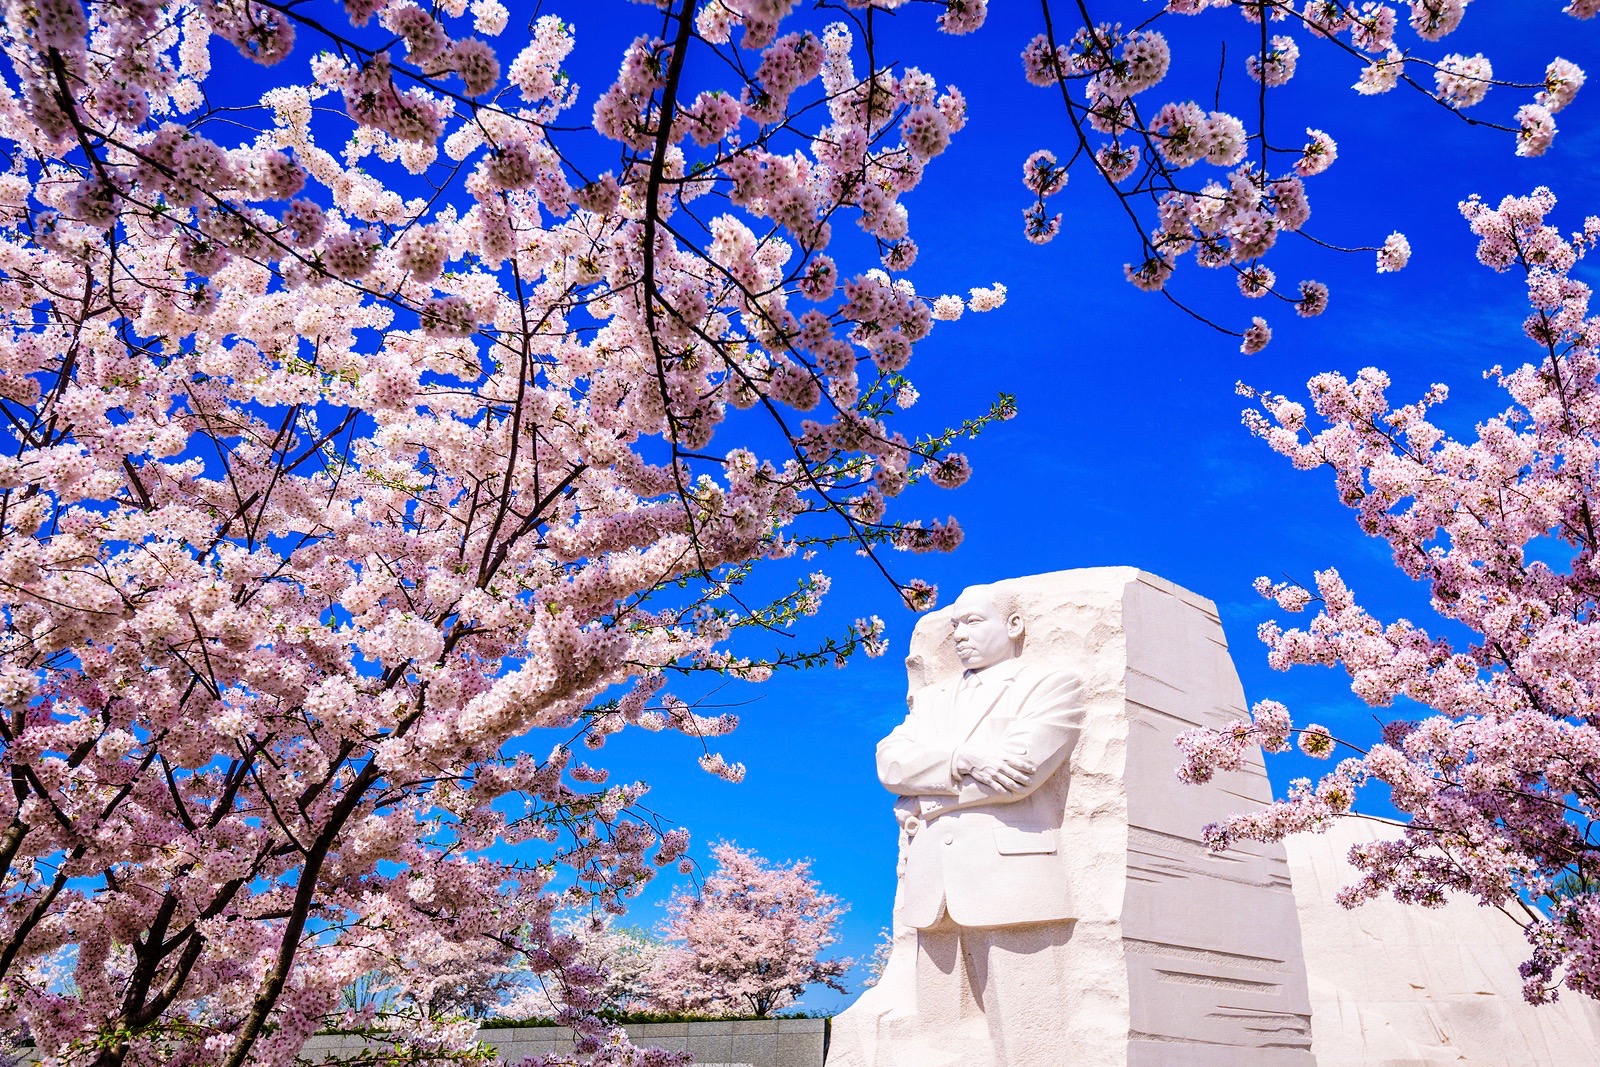 During National Cherry Blossom Festival Ronald Reagan Washington